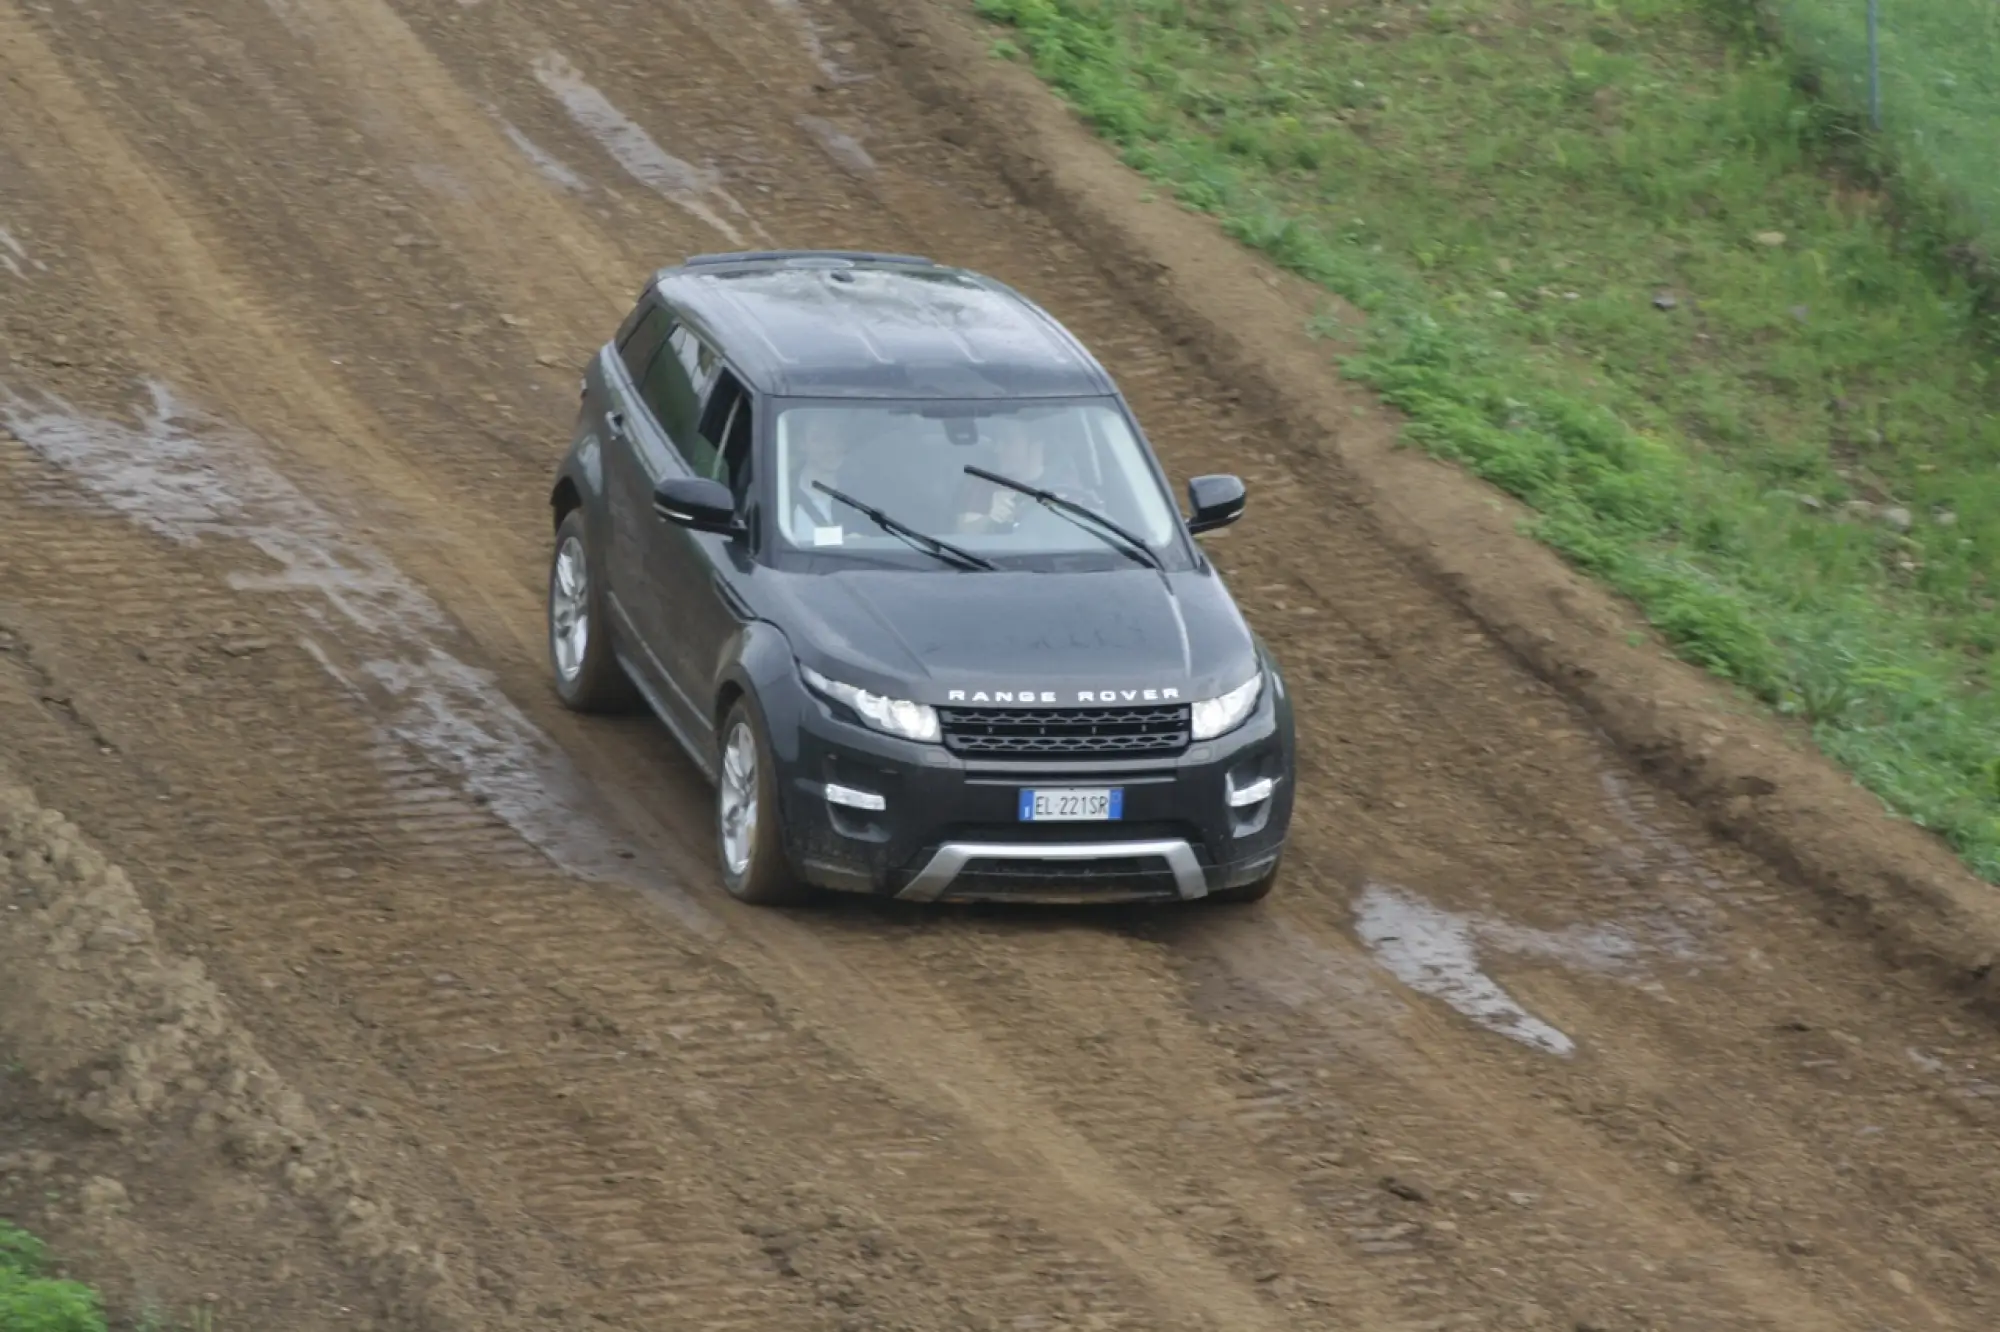 Range Rover Evoque - Test Drive 2012 - 56